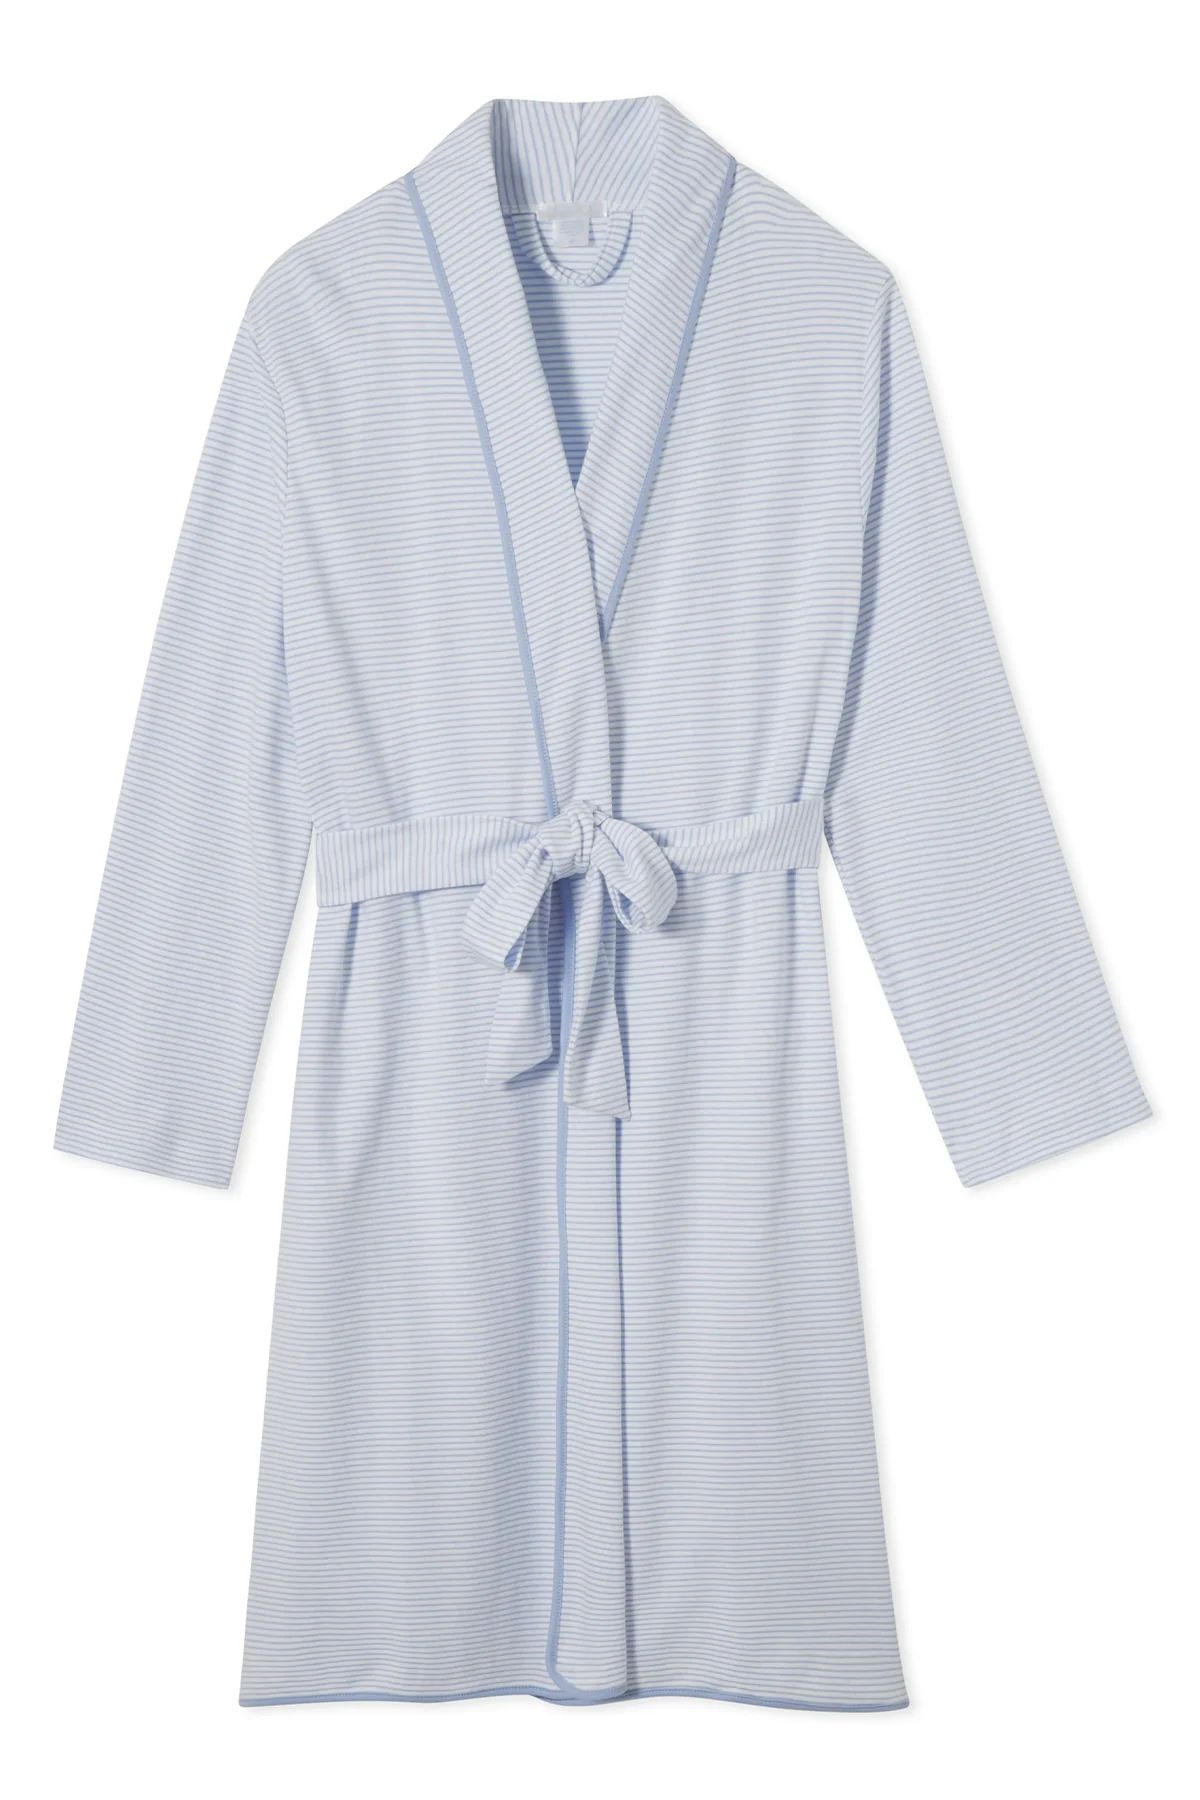 Pima Robe in French Blue | LAKE Pajamas